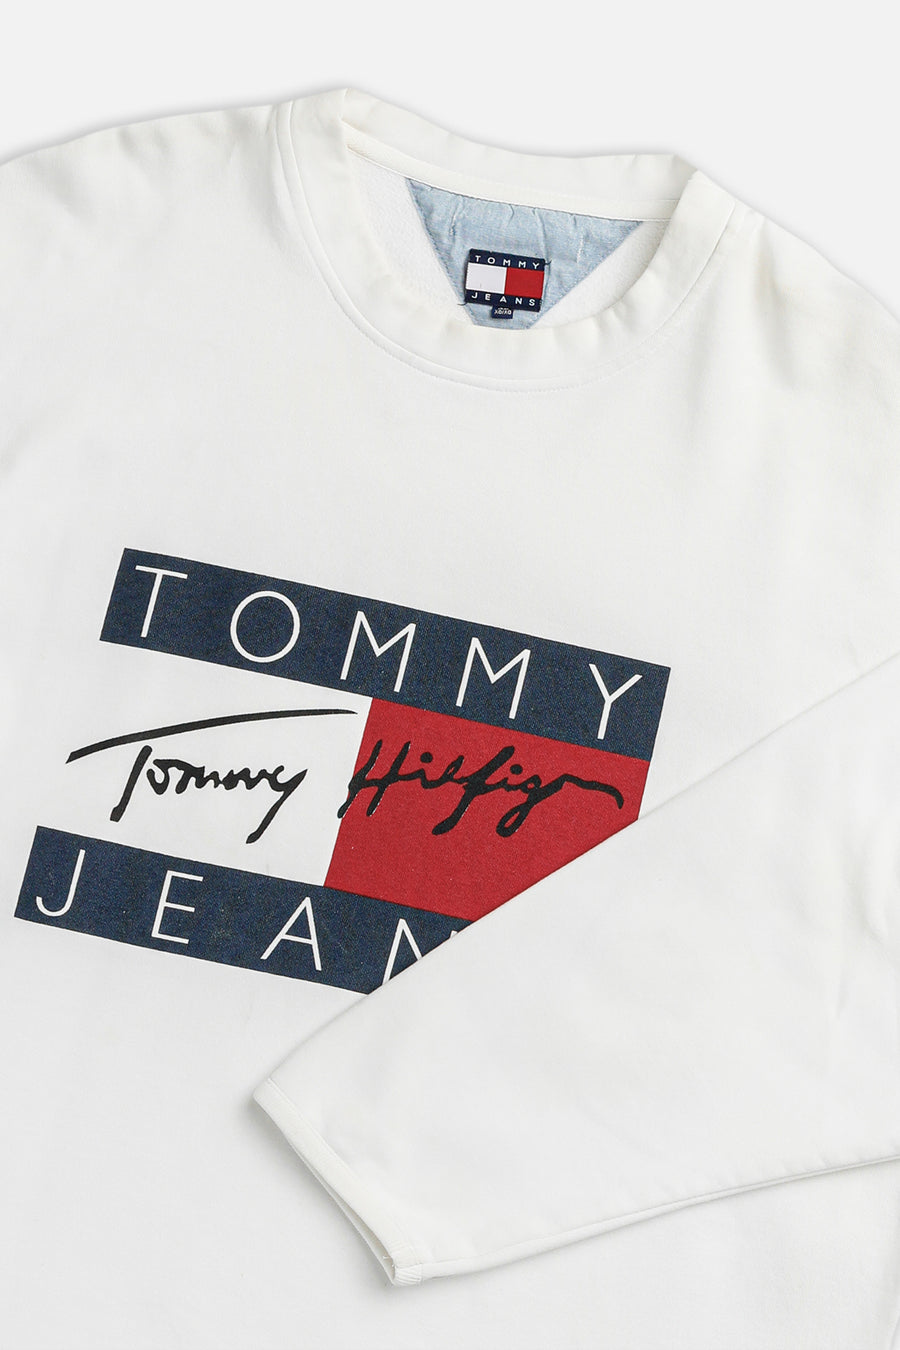 Vintage Tommy Sweatshirt - XL